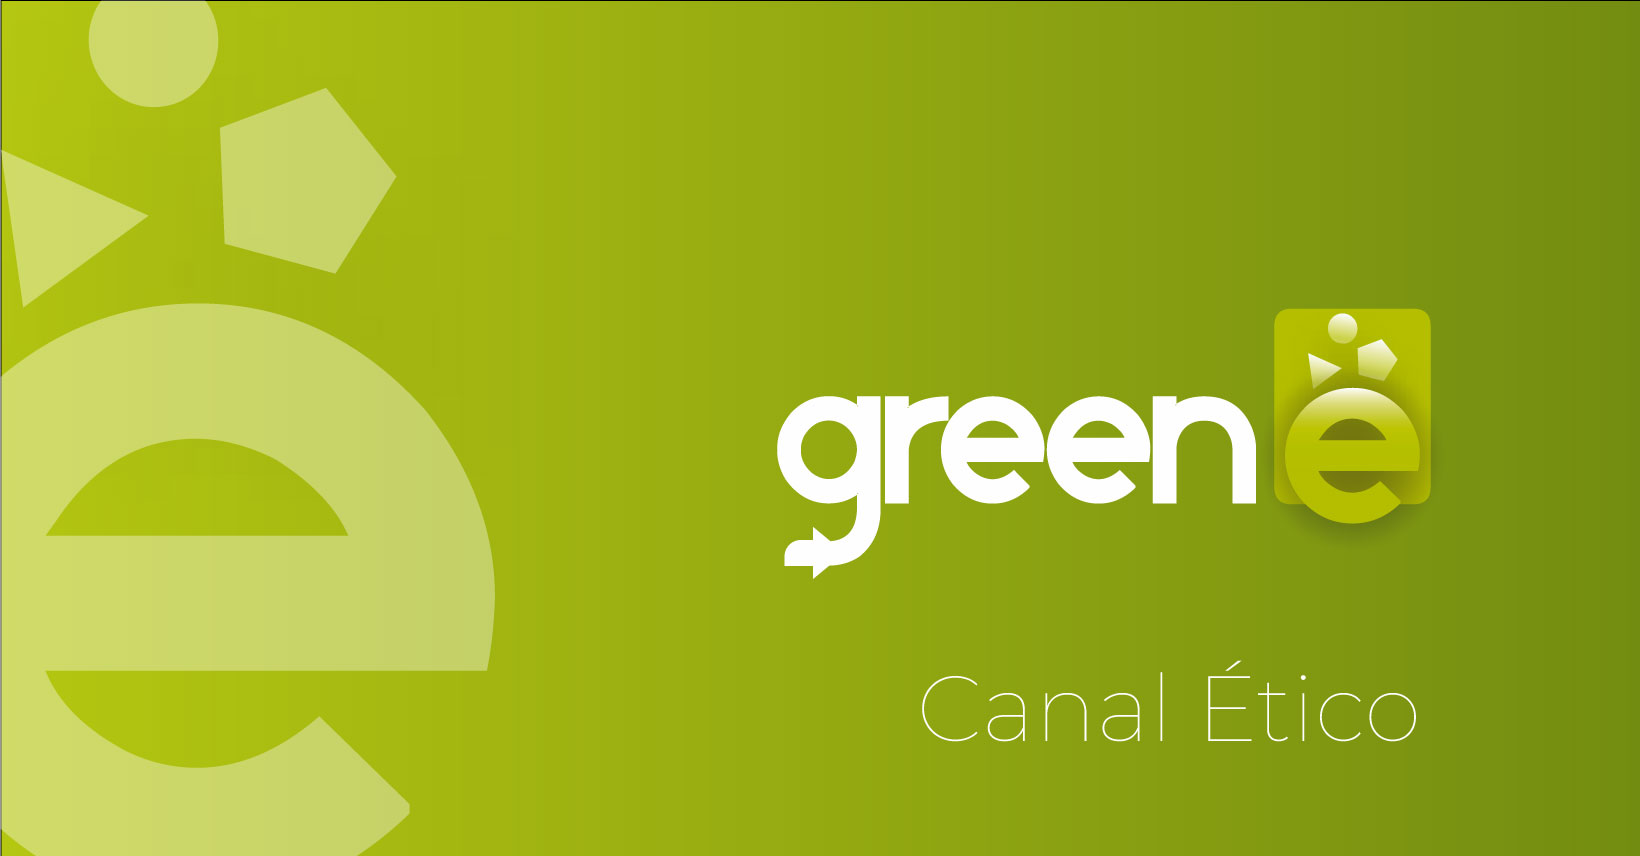 greene canal ético